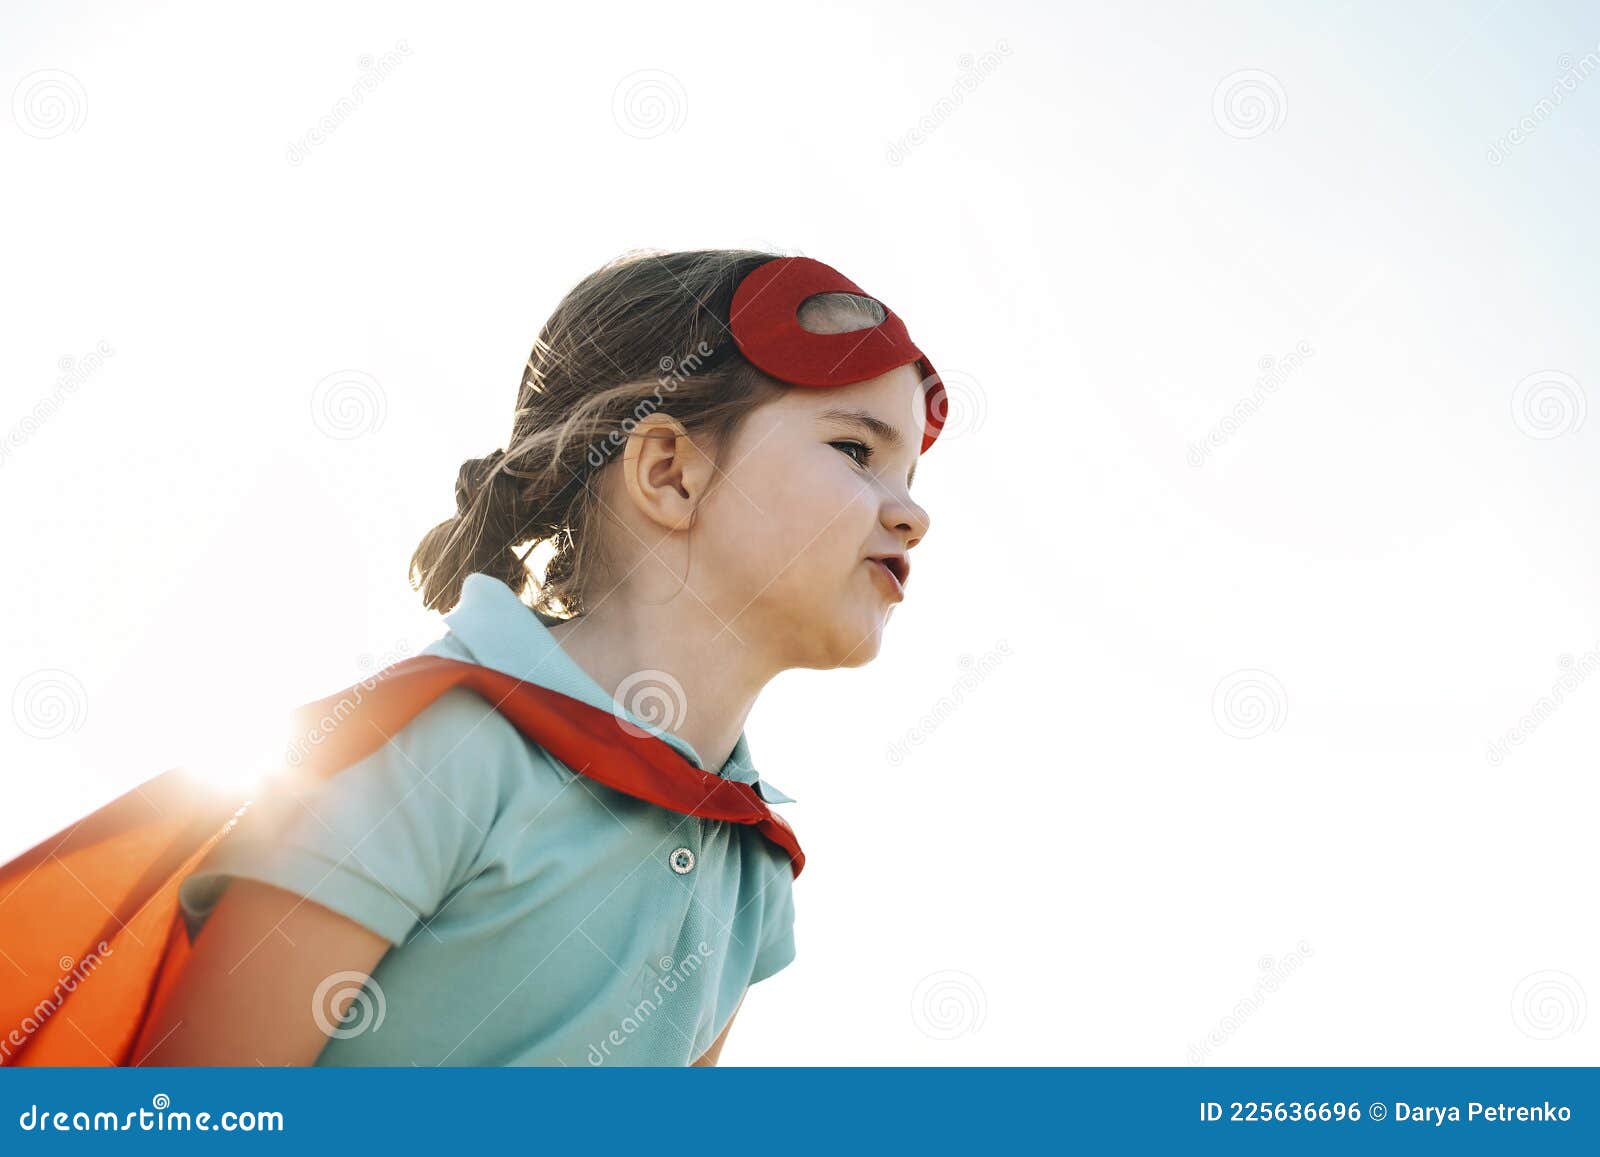 superhero kid against blue sky background